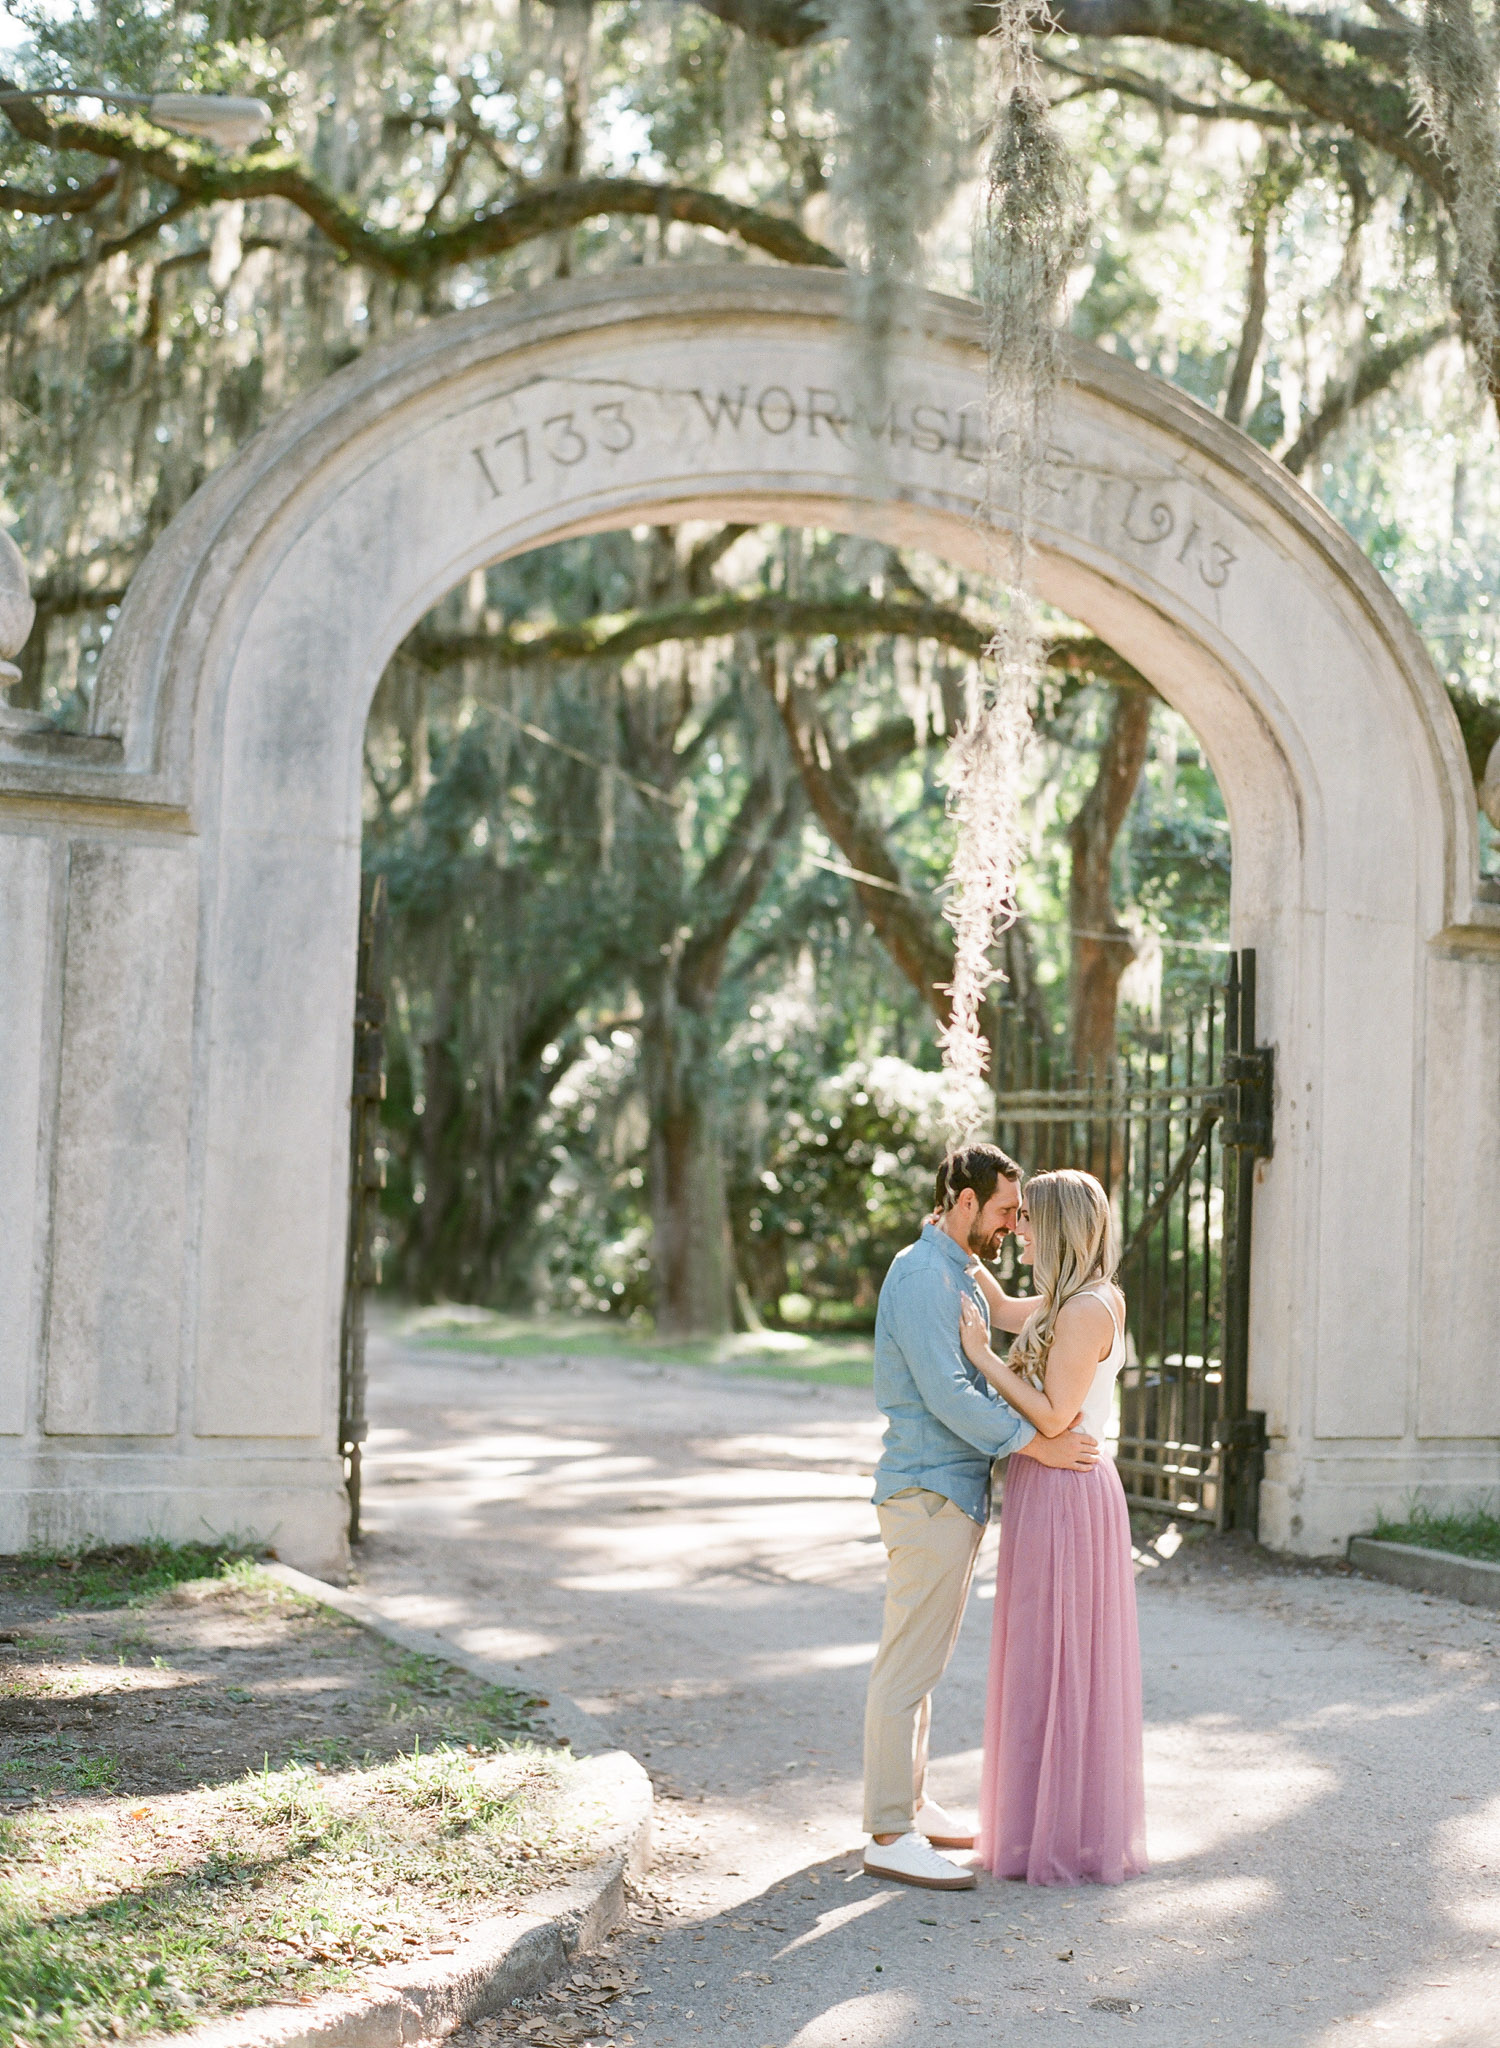 Wormsloe-Savannah-Engagement-Photos-13.jpg